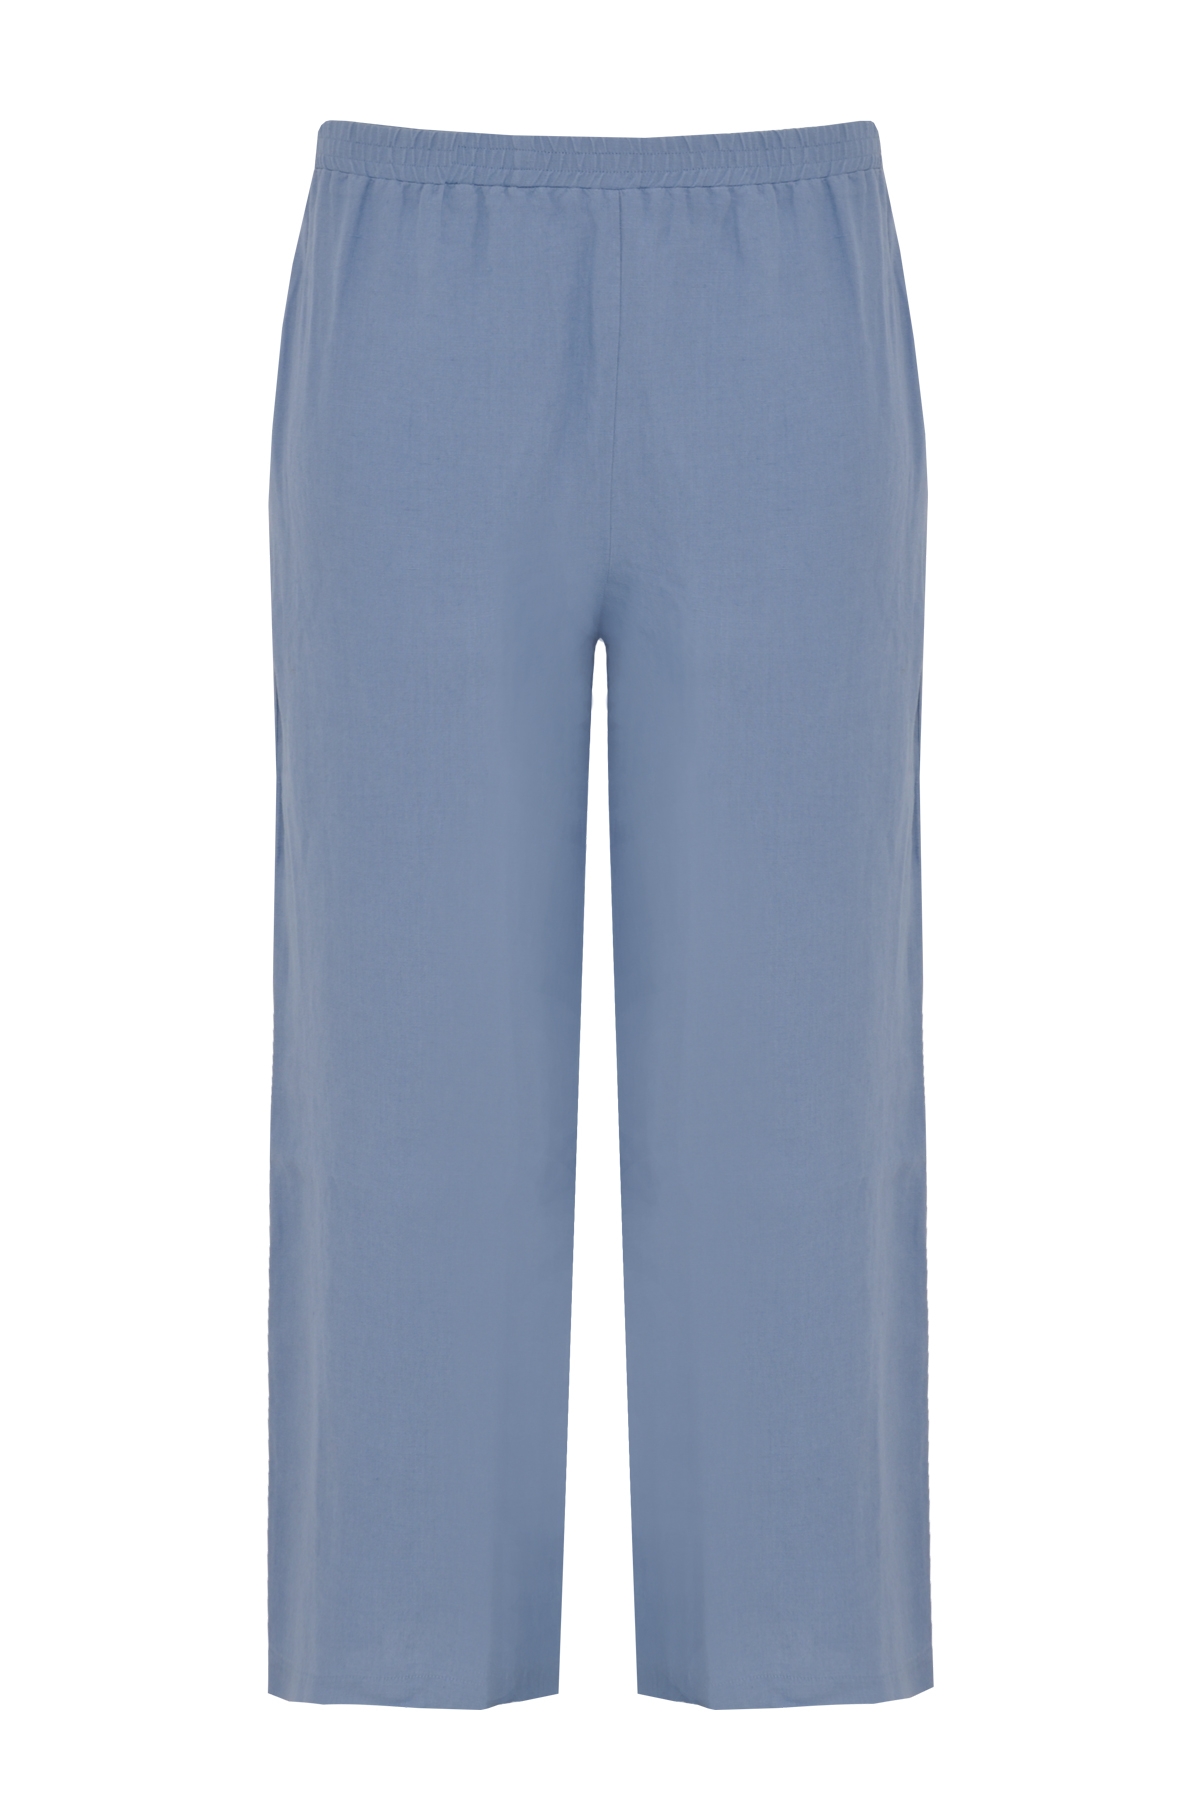 Yoek | Pantalon wide-fit long lin